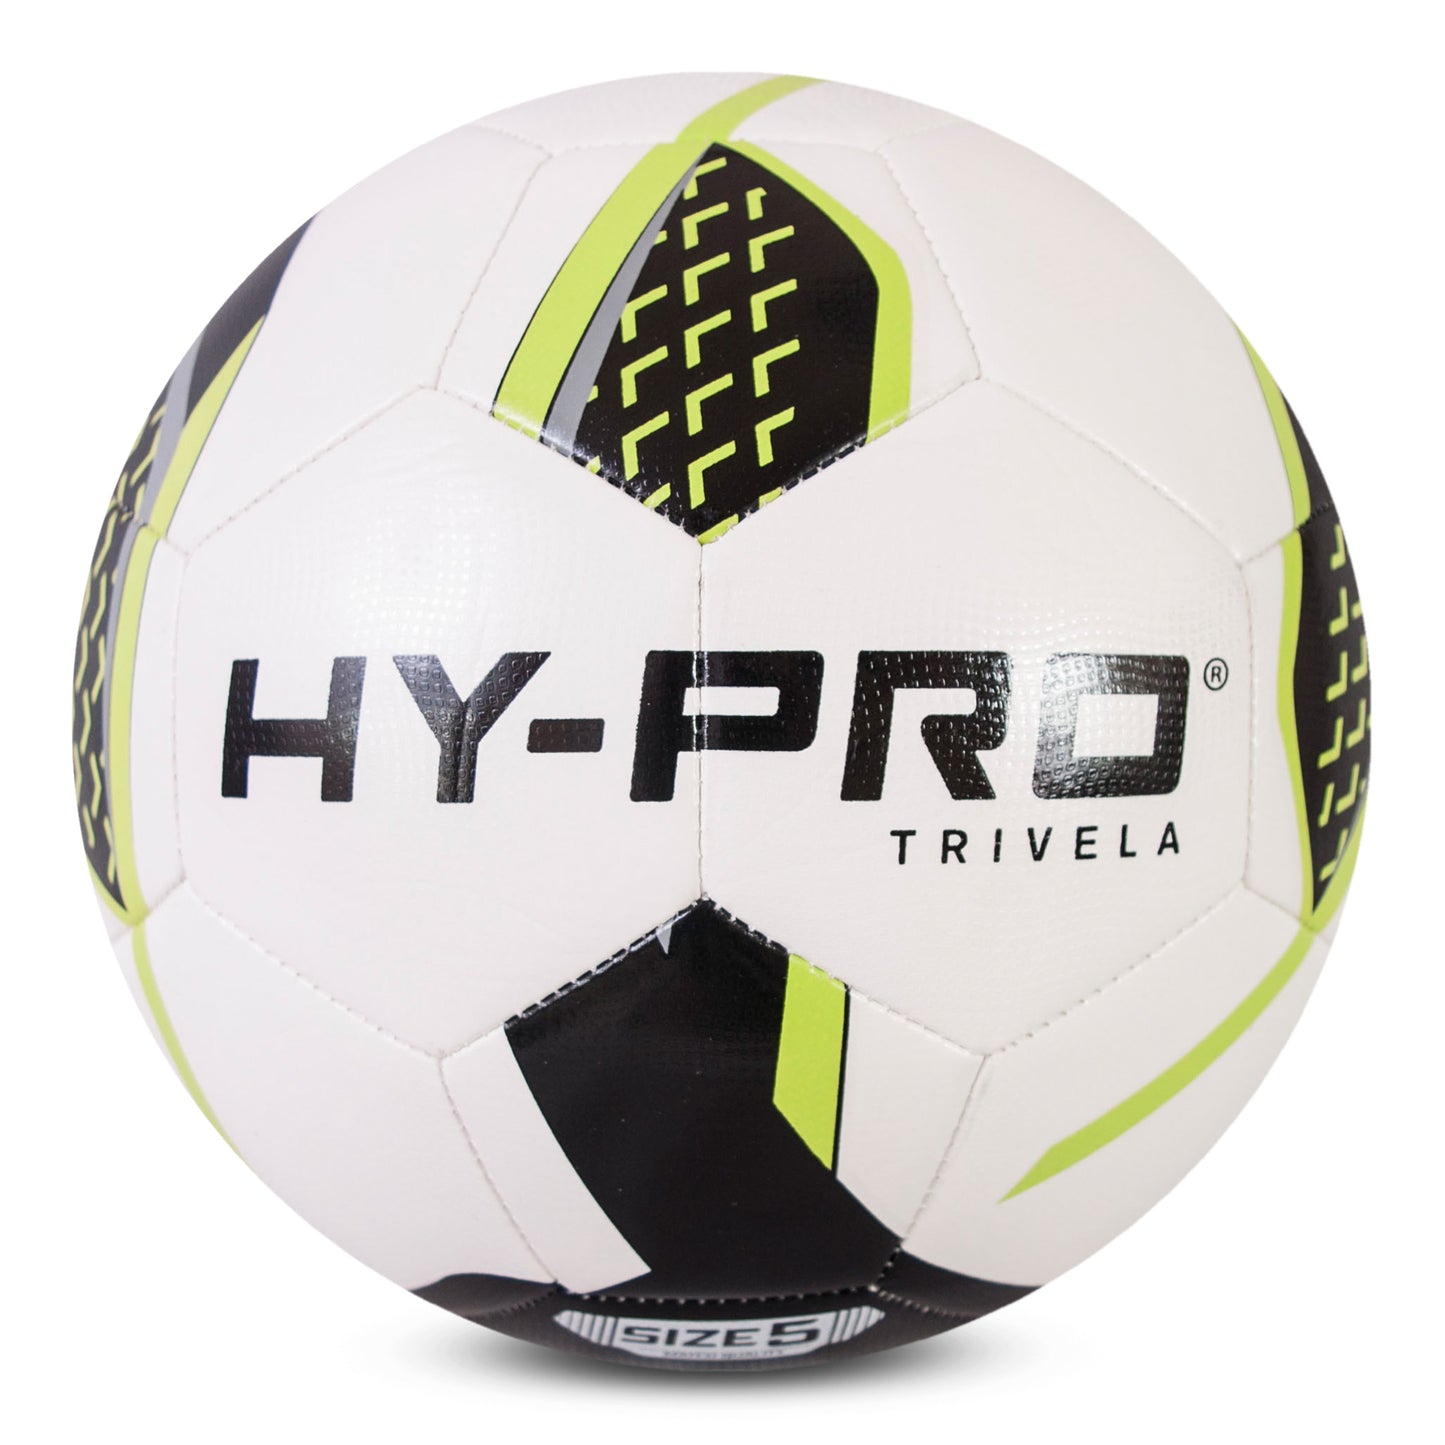 Hy-Pro Trivela Match Football